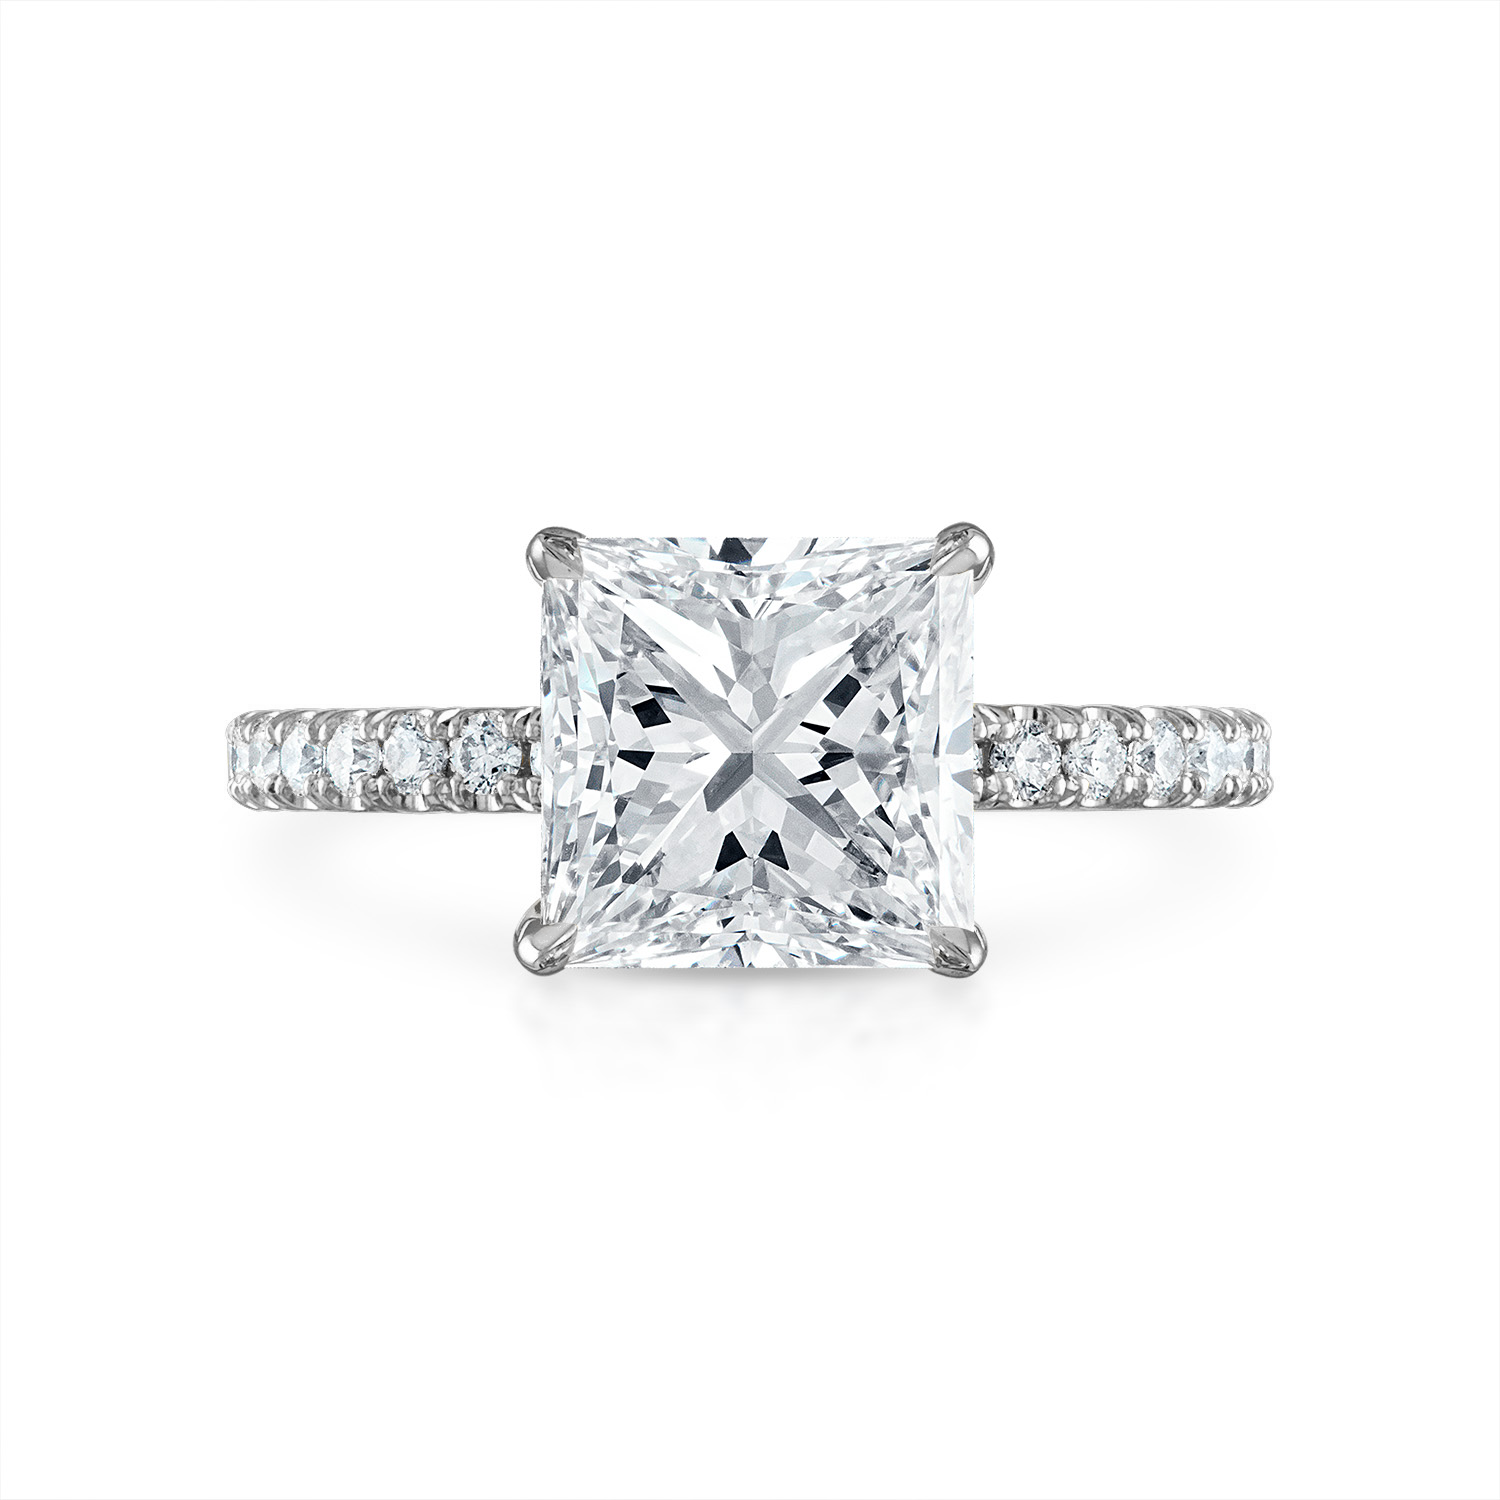 Princess Pave Engagement Ring in Platinum